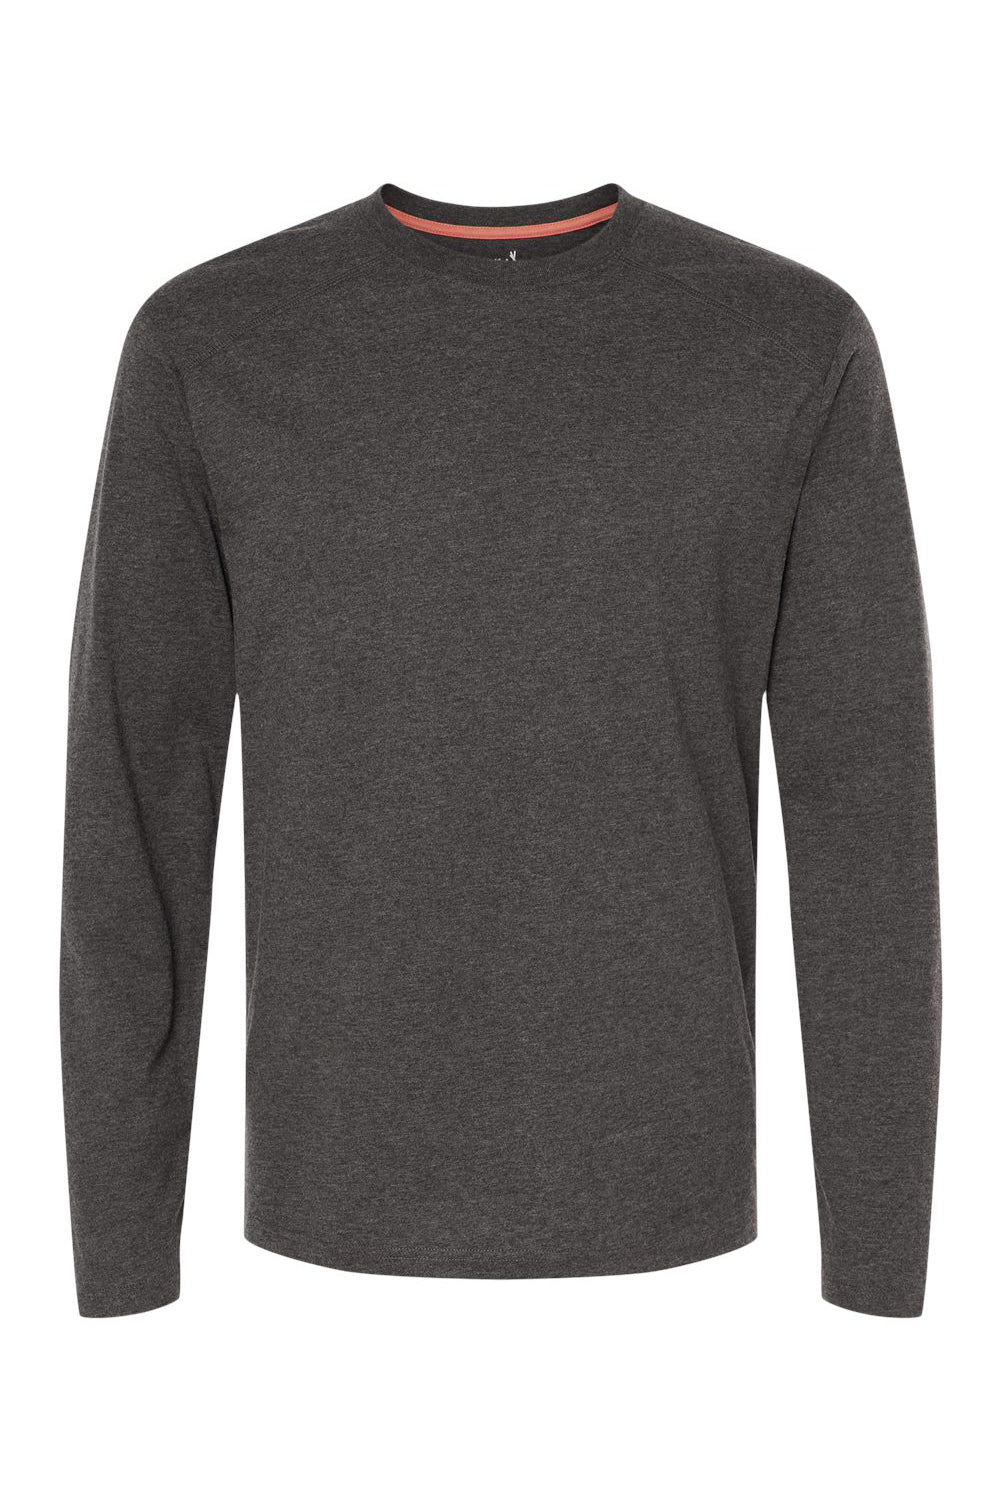 Kastlfel 2016 Mens RecycledSoft Long Sleeve Crewneck T-Shirt Carbon Grey Flat Front